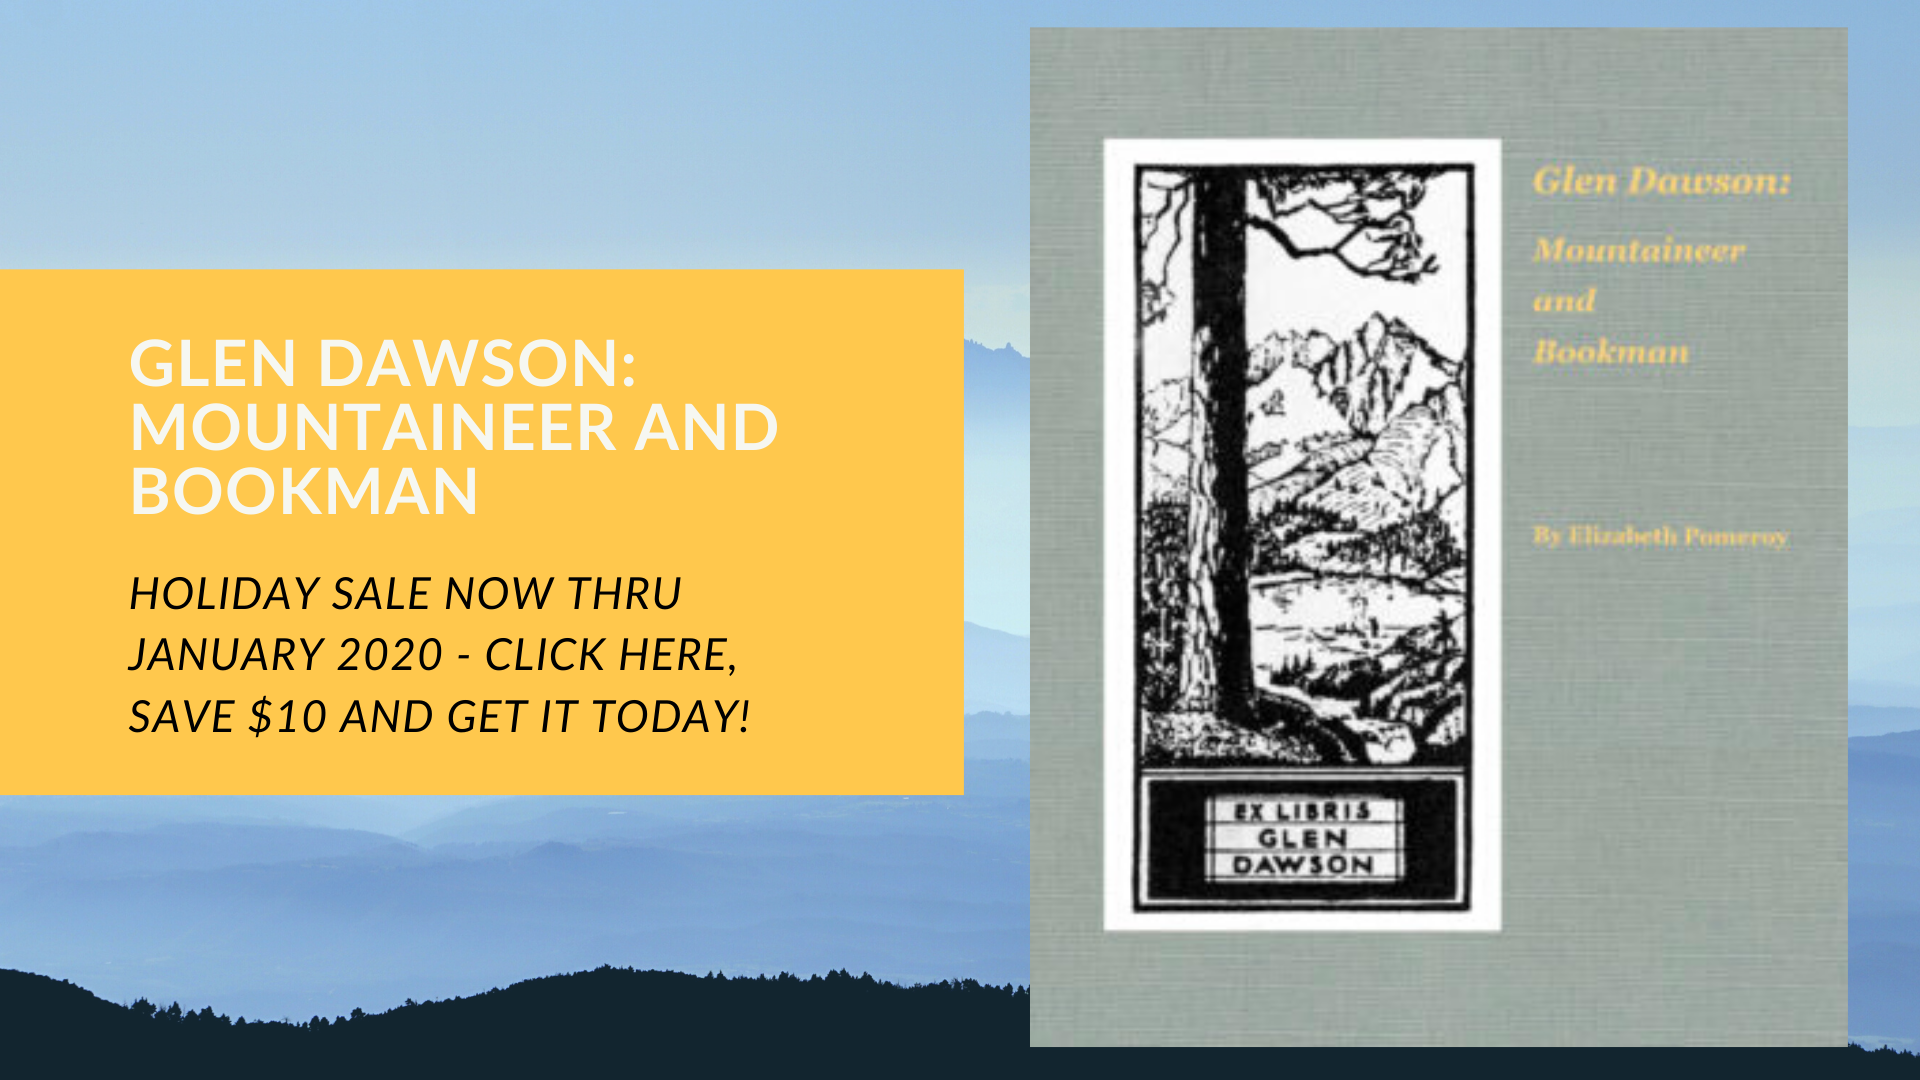 Glen Dawson: Mountaineer and Bookman by Elizabeth Pomeroy